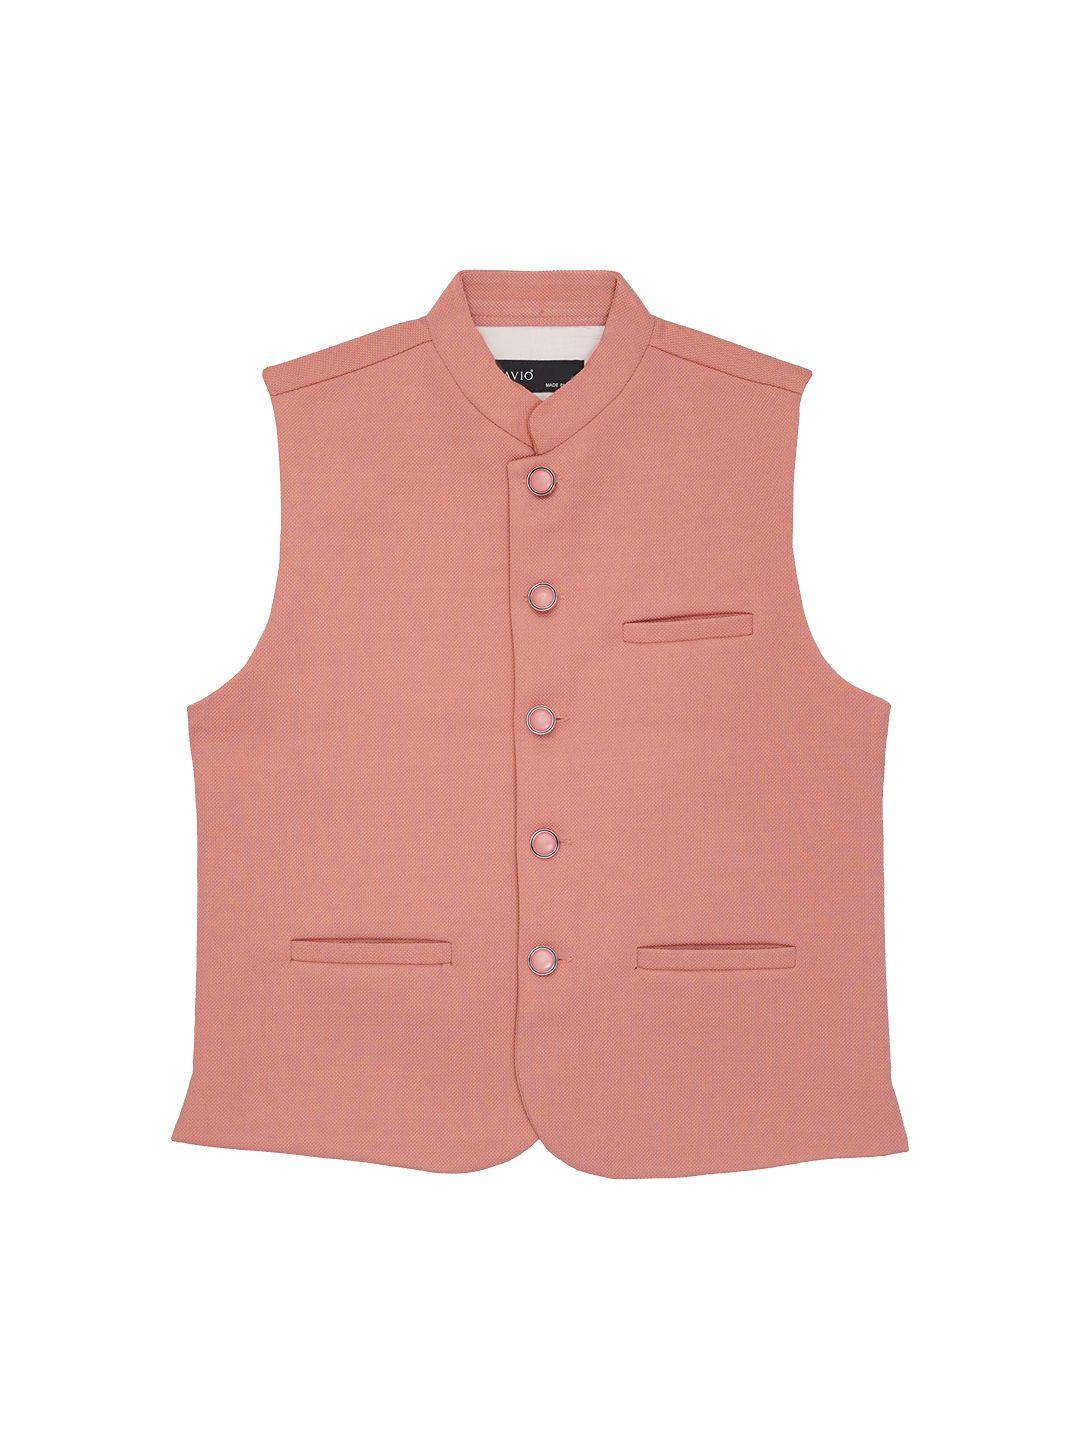 cavio-boys-mandarin-collar-sleeveless-pure-cotton-nehru-jackets